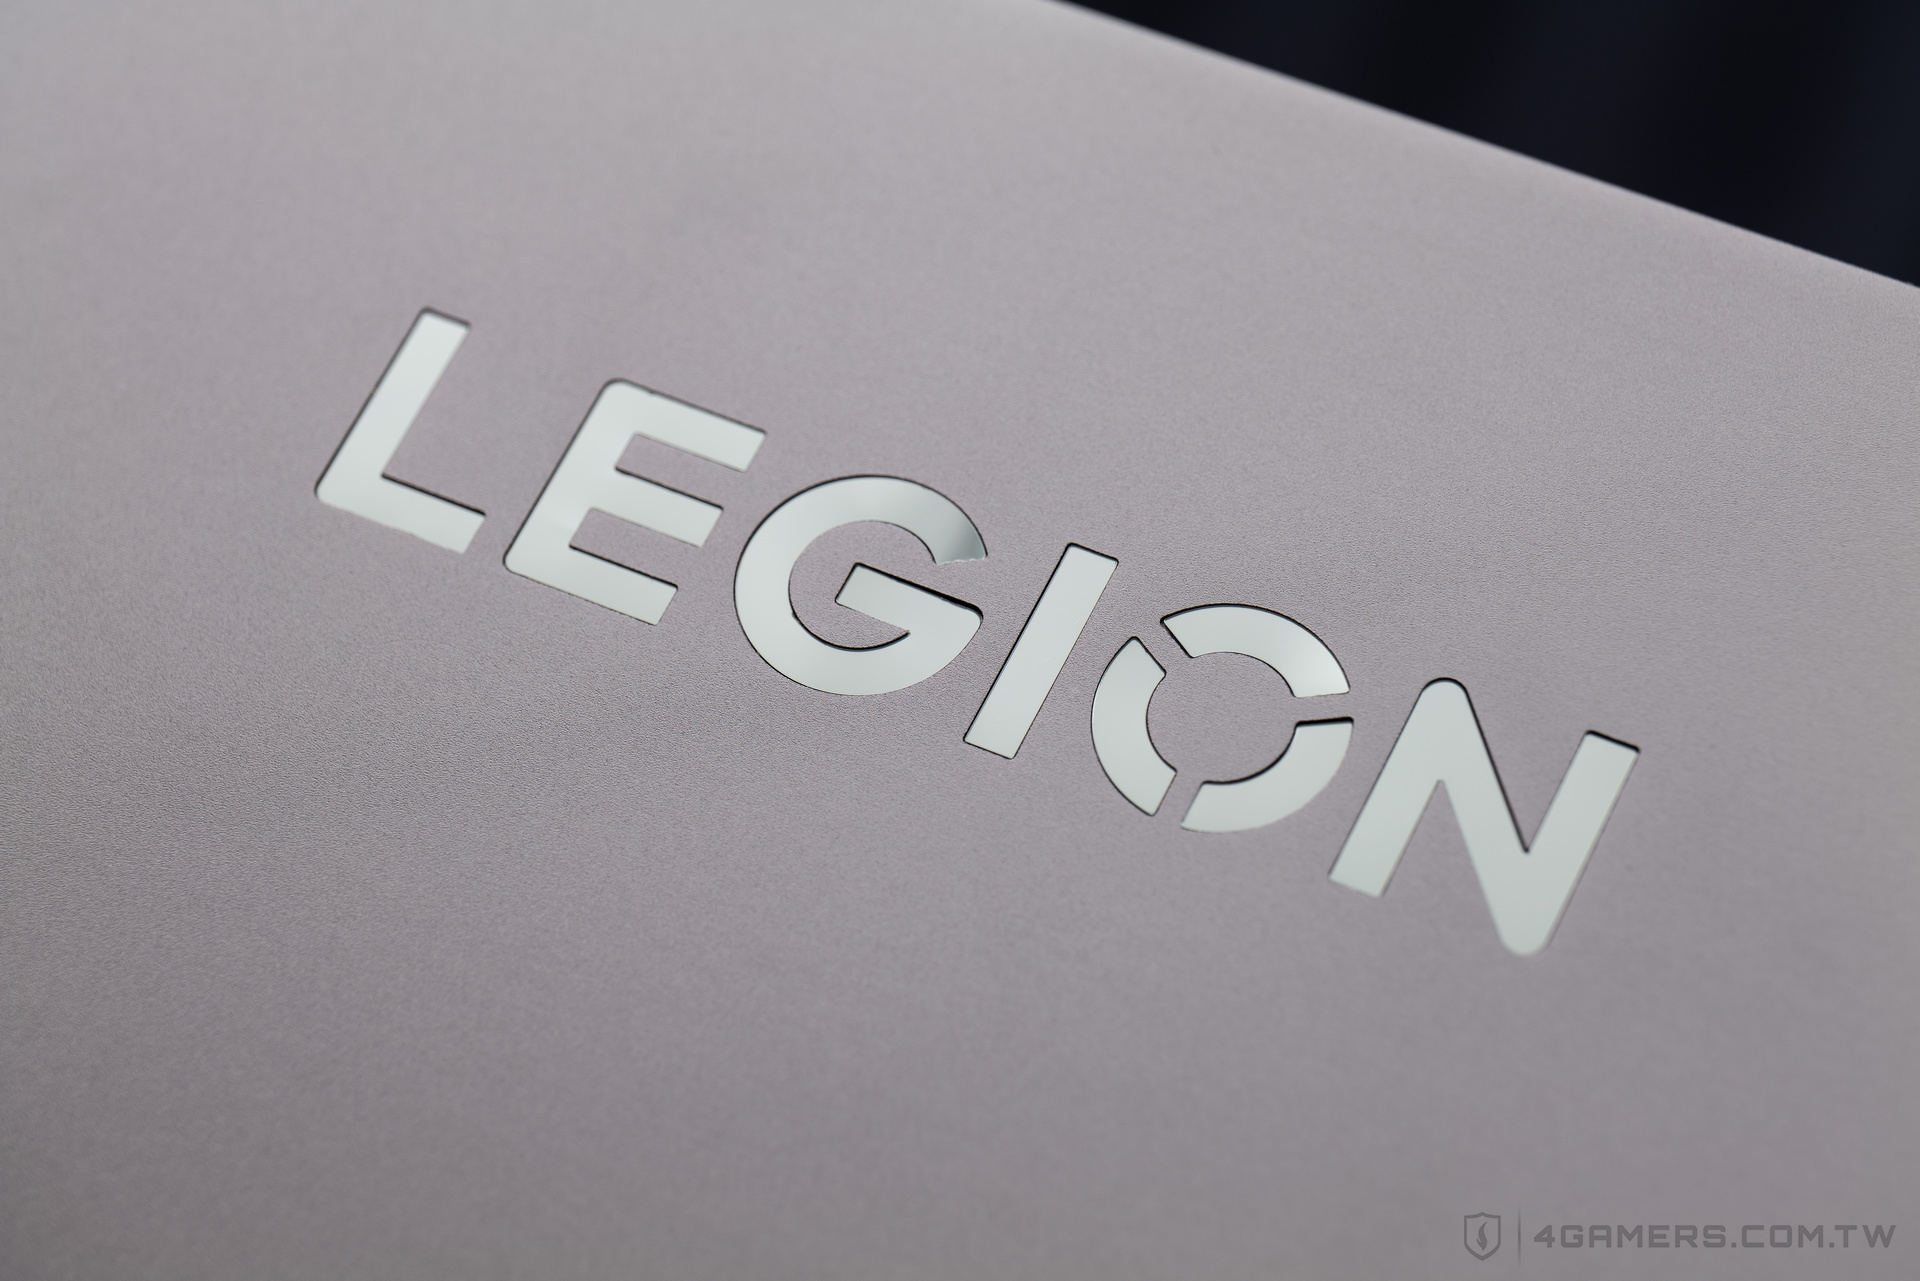 Lenovo Legion 5i Pro 2022